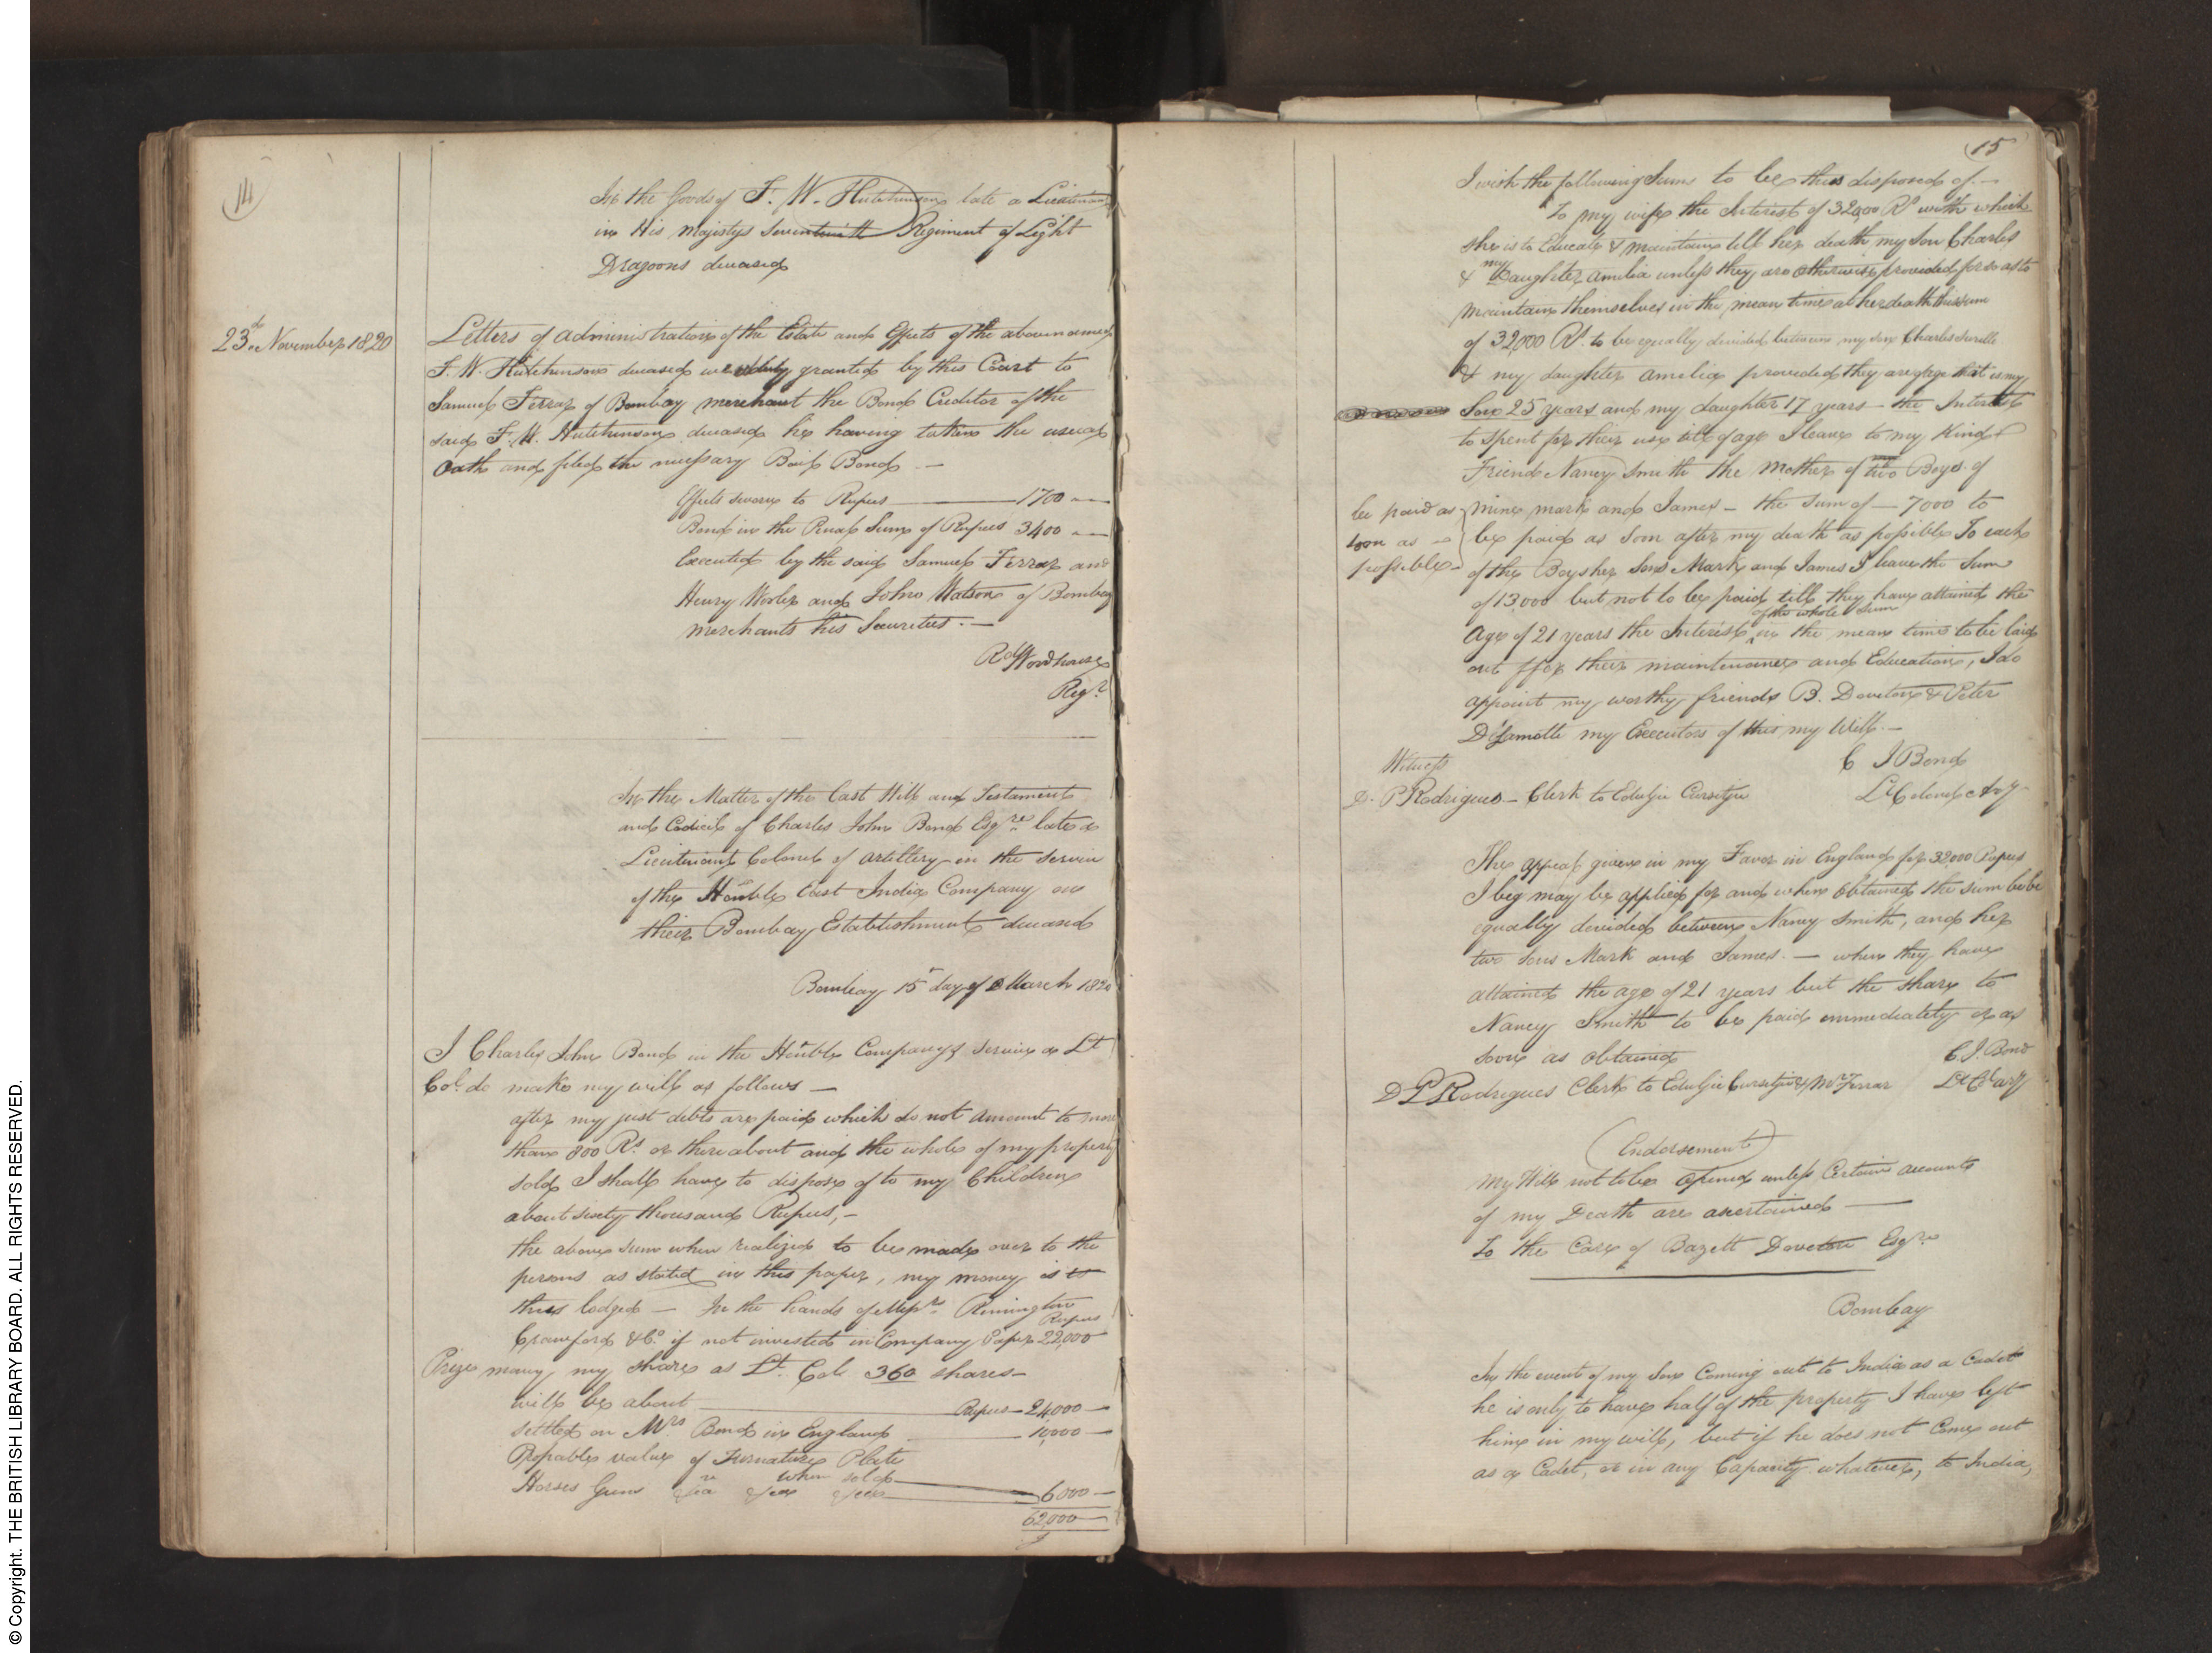 Probate record for Lieutenant Charles John Bond in 1820